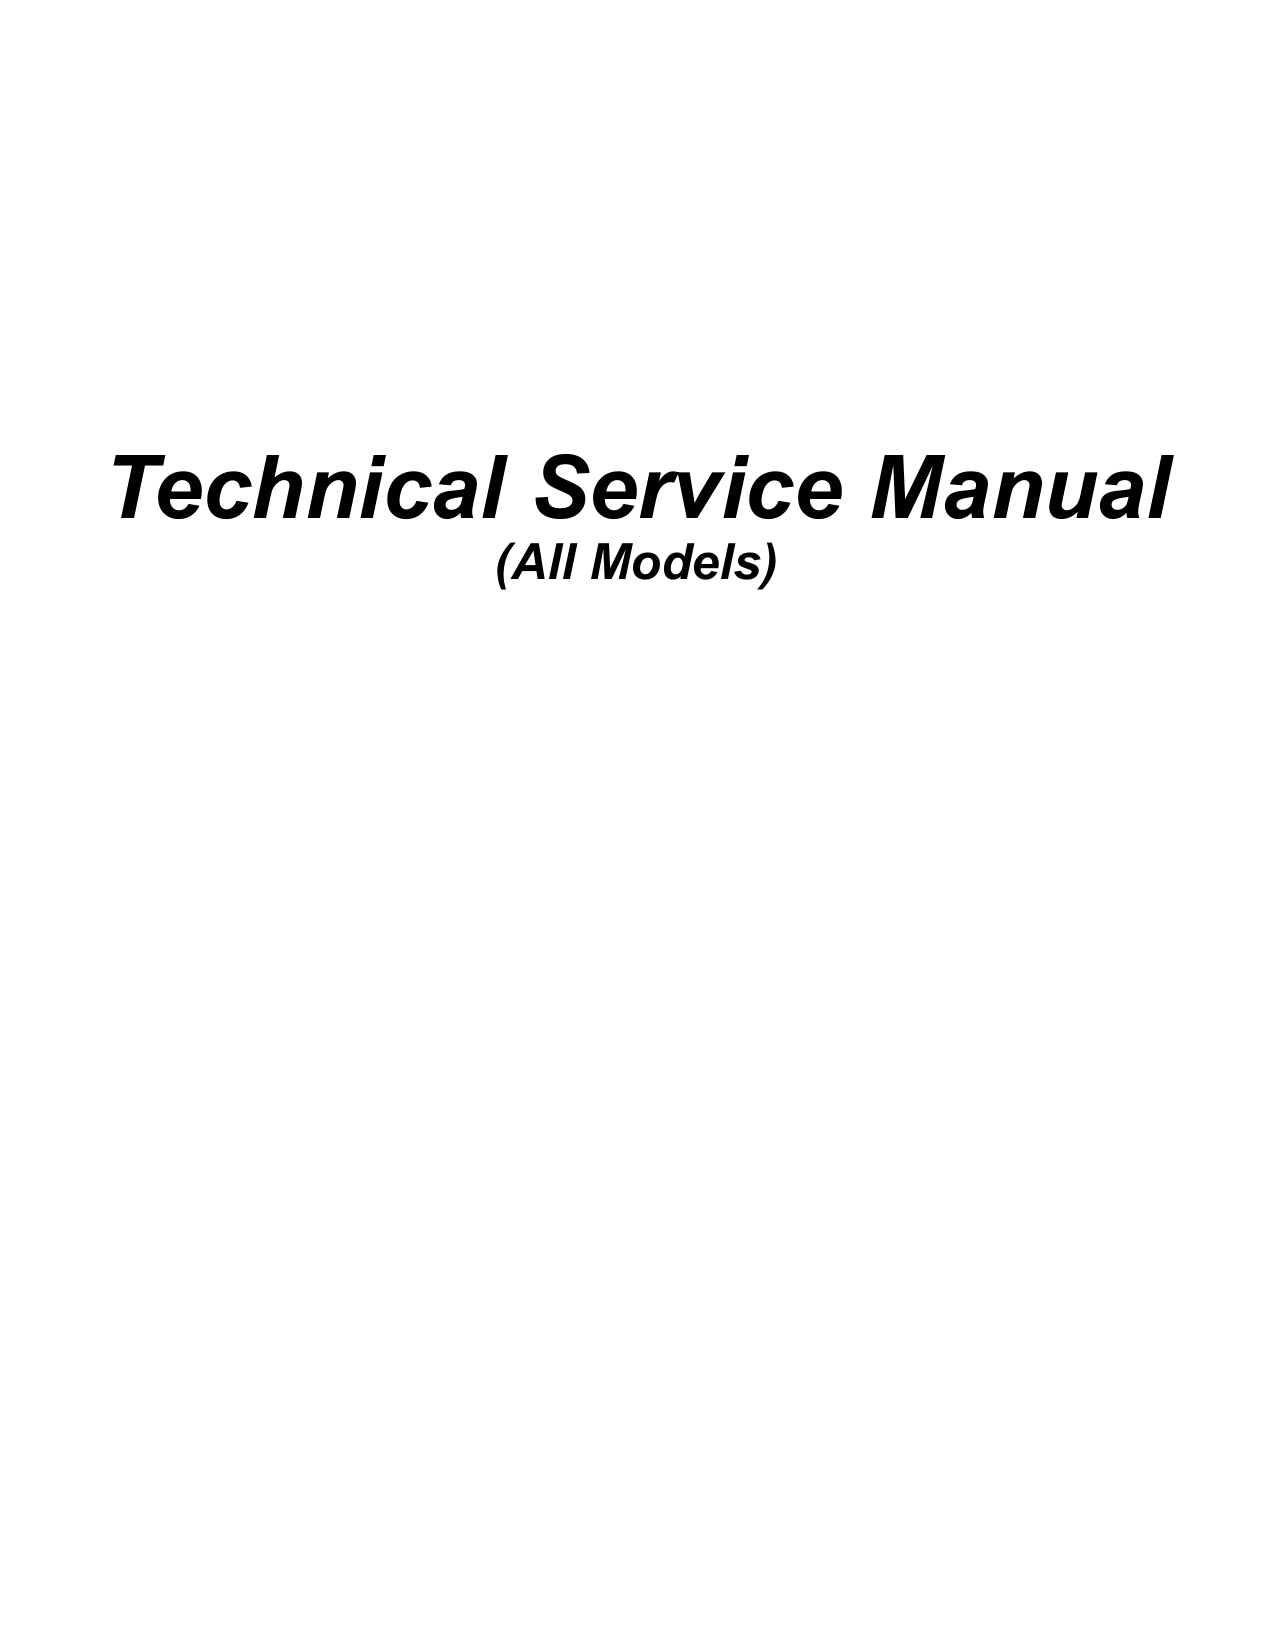 pdf for True Refrigerator T-72-6 manual